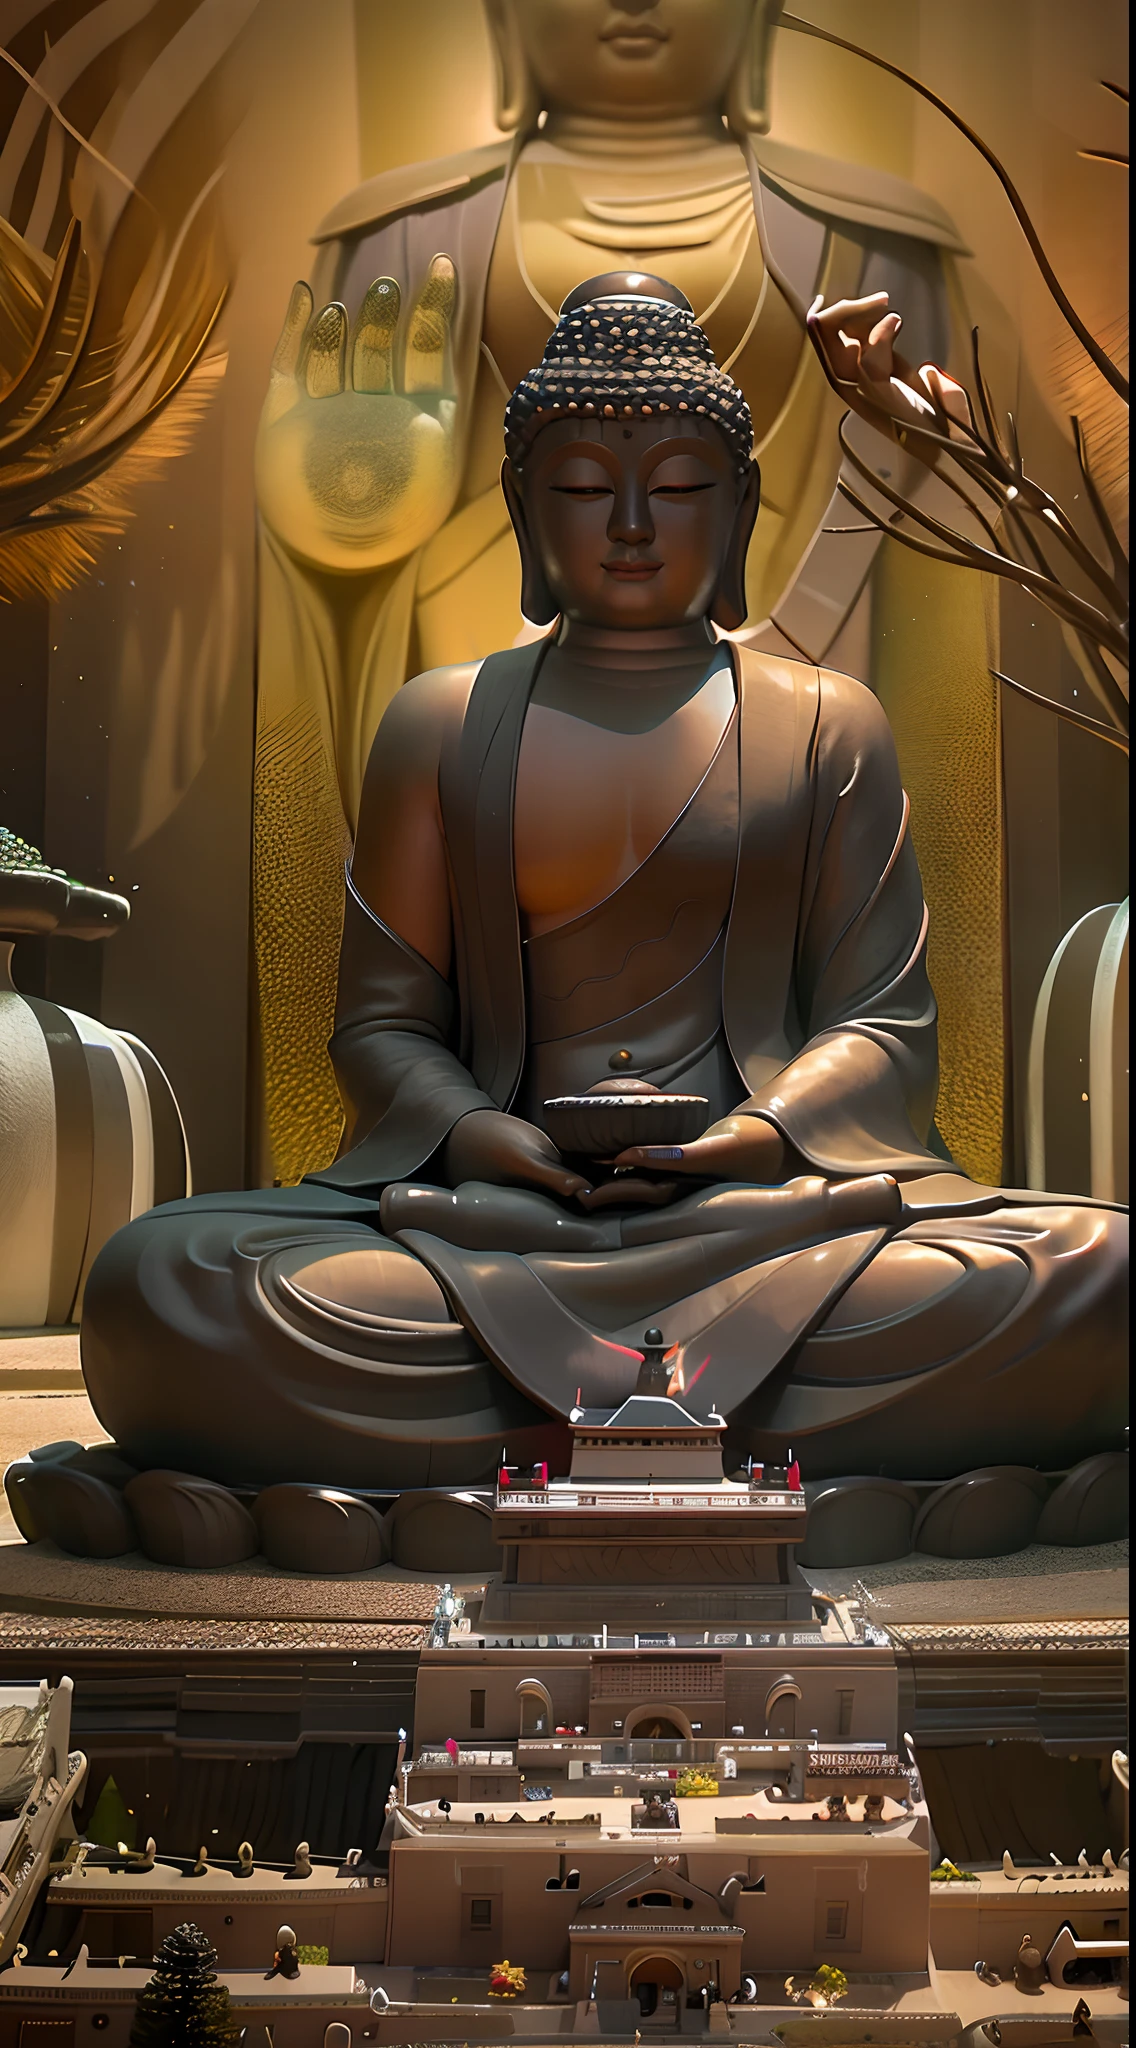 There is a Будда statue in the pond, a буддист Будда, Дзен-храм фон, буддизм, буддист, На пути к просветлению, Дзен-медитация, Будда, На пути к просветлению, дзен-атмосфера, Безмятежное выражение, Естественный фон дзен, Красивое изображение, мощная дзен-композиция, Спокойствие 4K, дзен-медитация киберпанк, безмятежная улыбка, медитация, чувство дзен